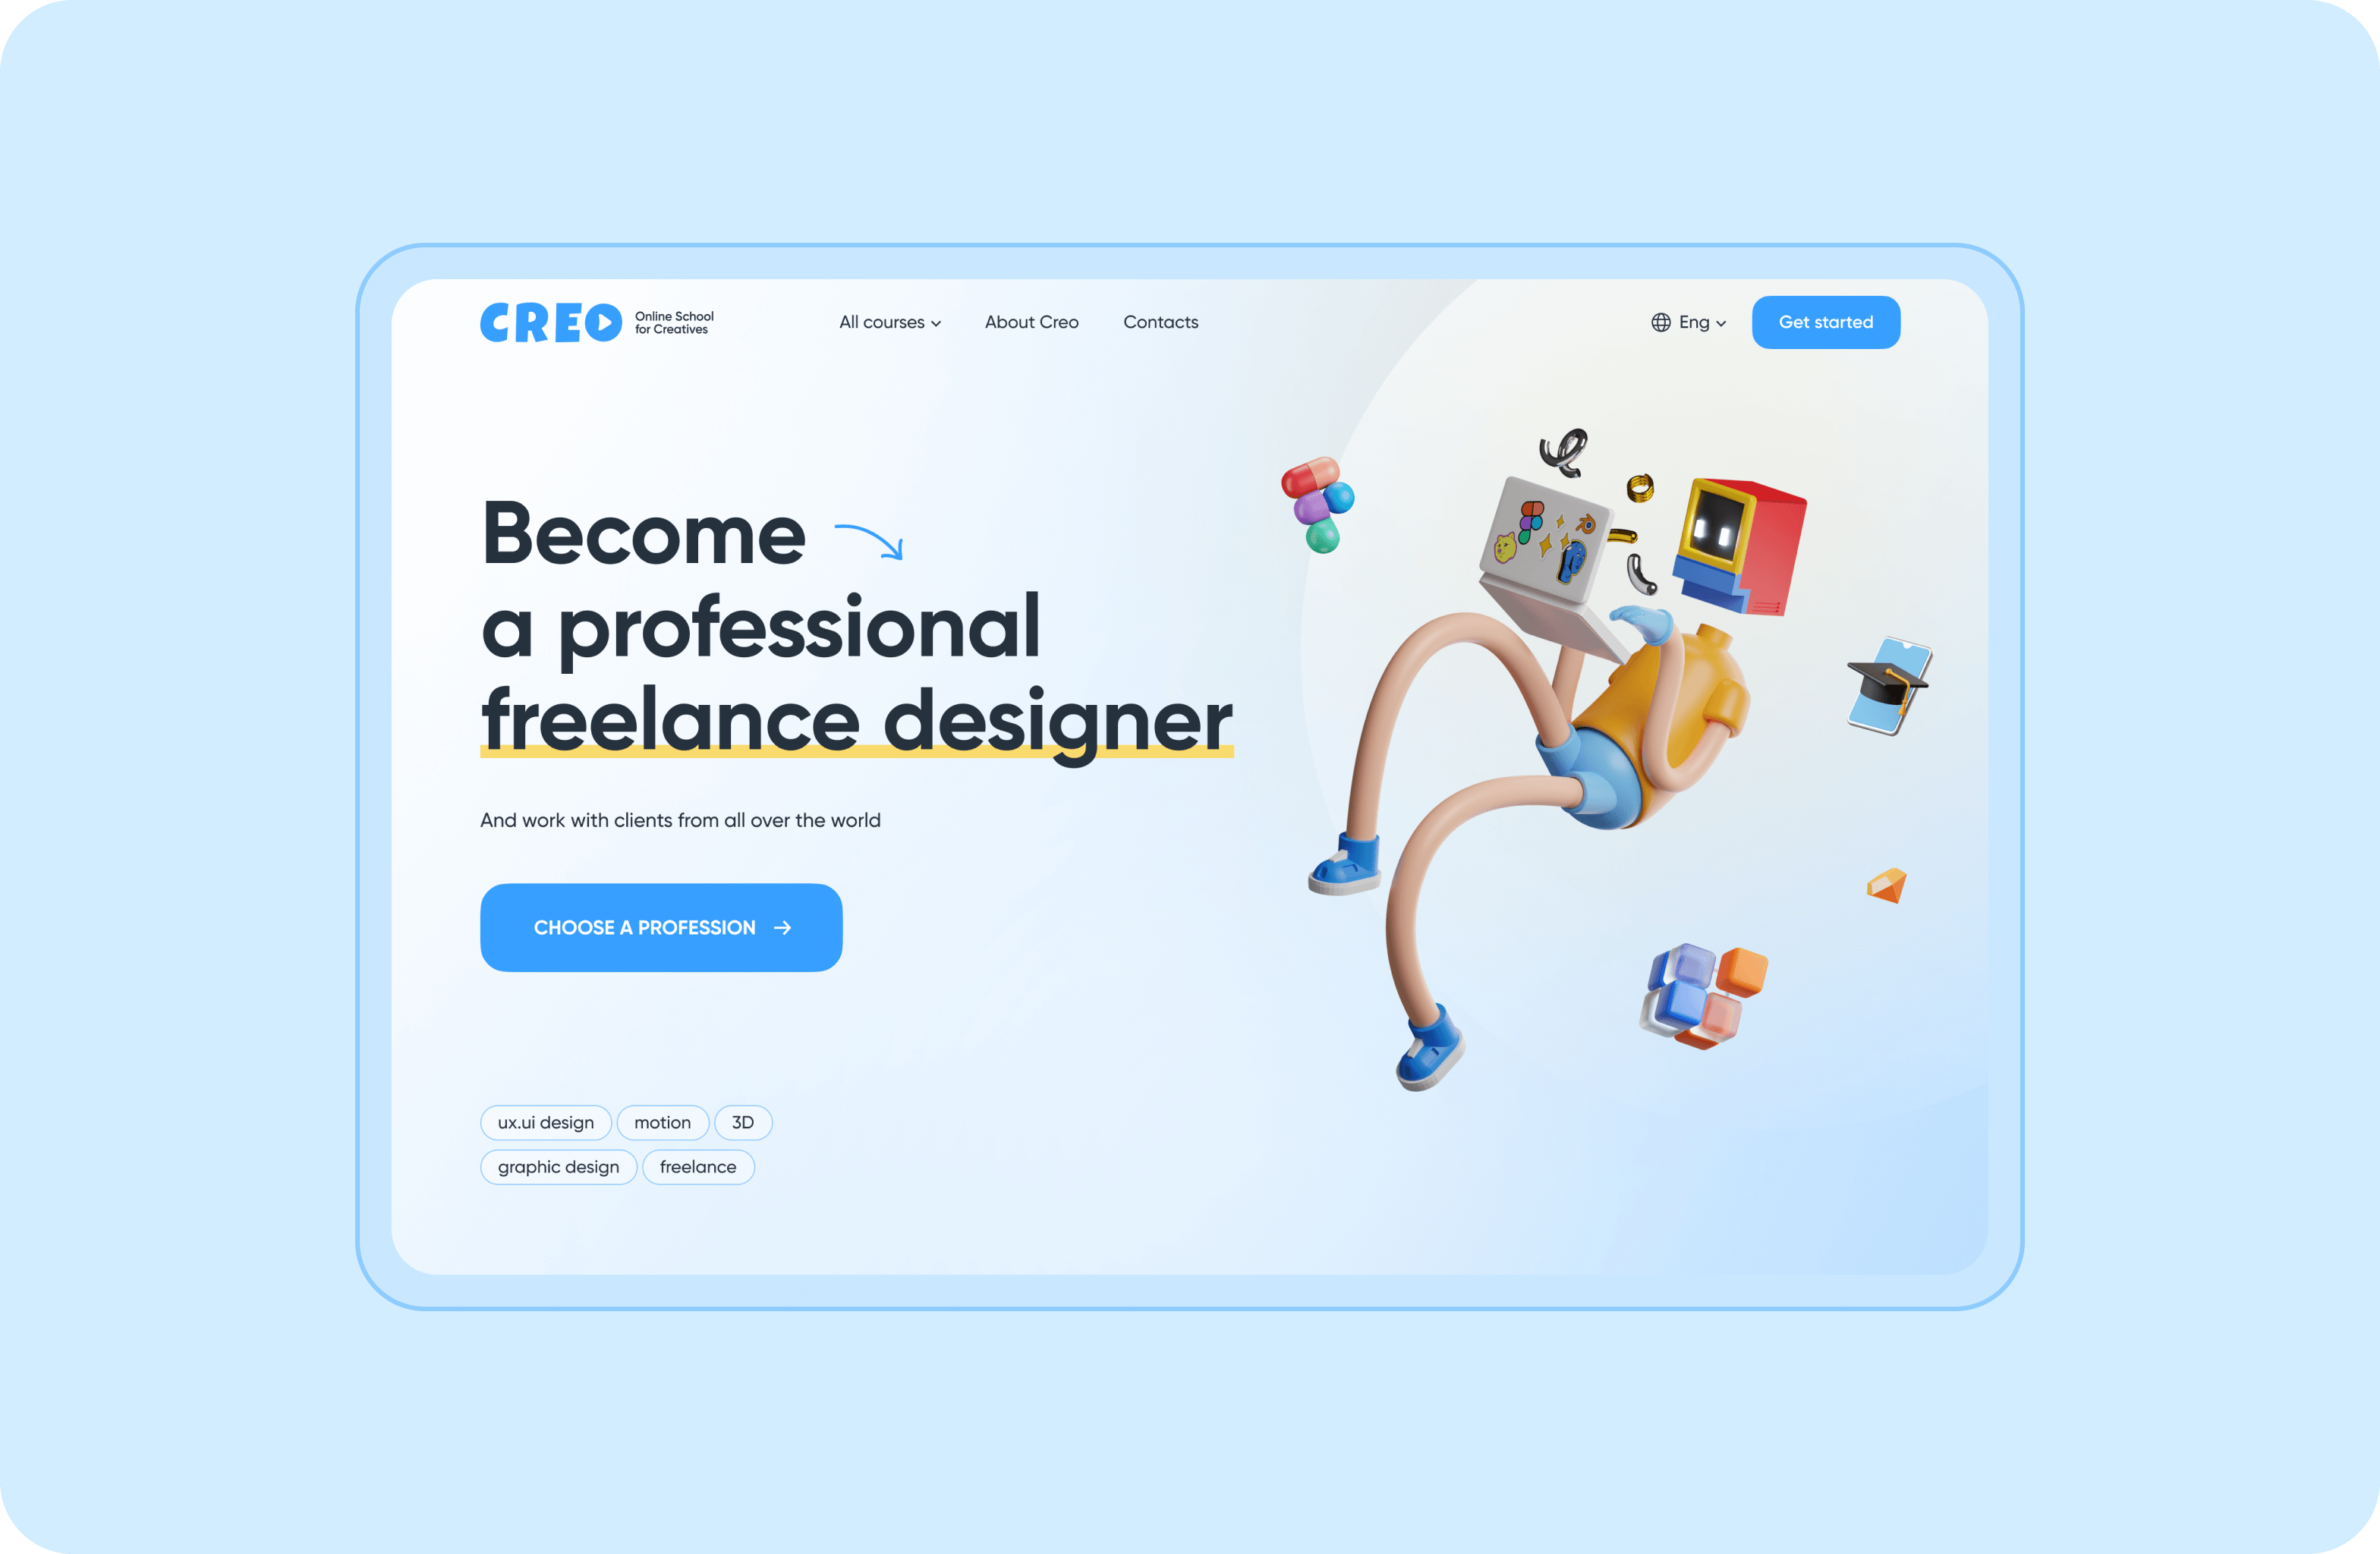 creo-case-website-home-block-desktop.png - Розробка платформи онлайн-навчання для дизайнерів Creo - goodface.agency